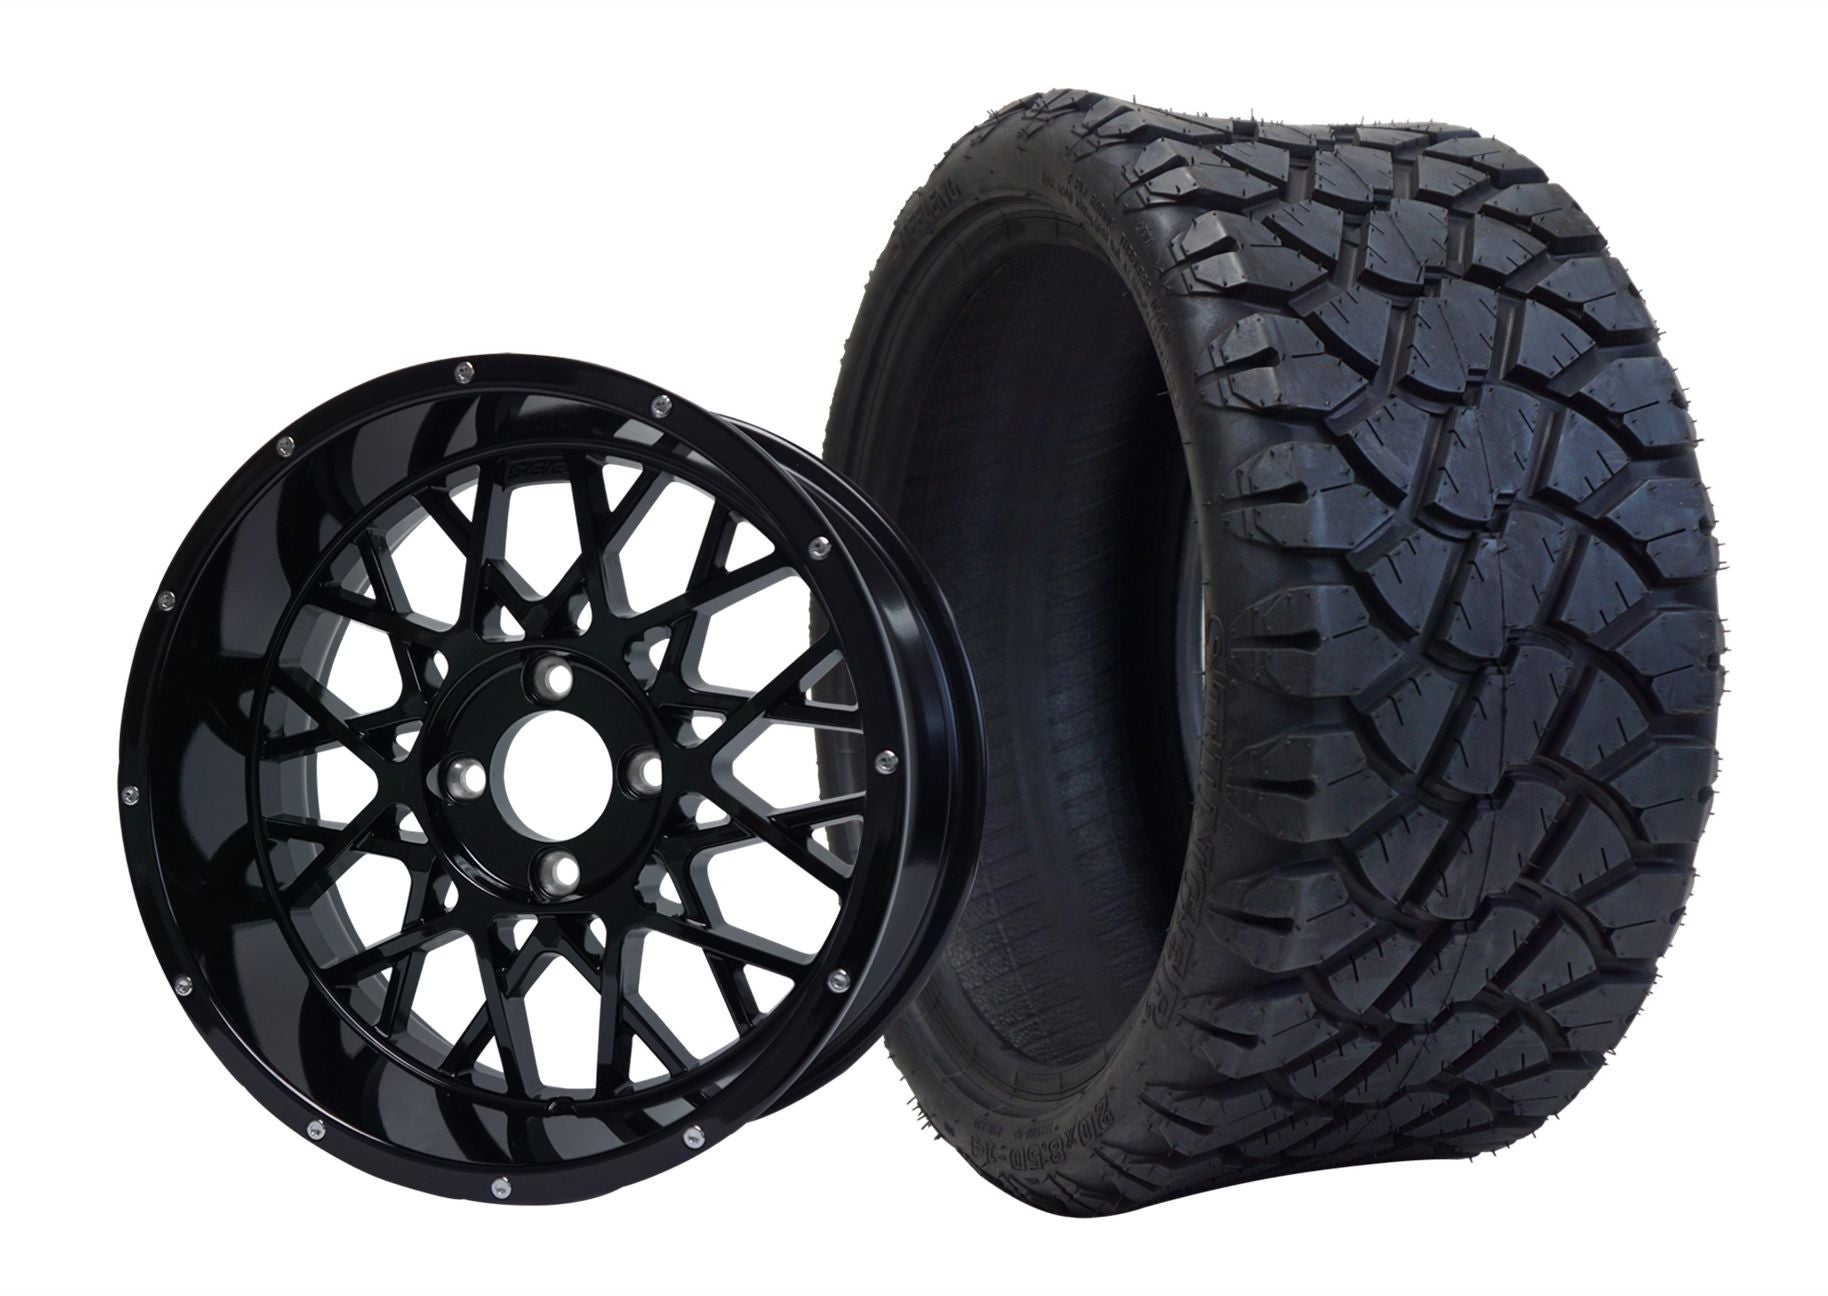 SGC 14" x 7" Venom Glossy Black Wheel - Aluminum Alloy STEELENG 20"x8.5"-14" STINGER AT Tire DOT approved WH1420-TR1402